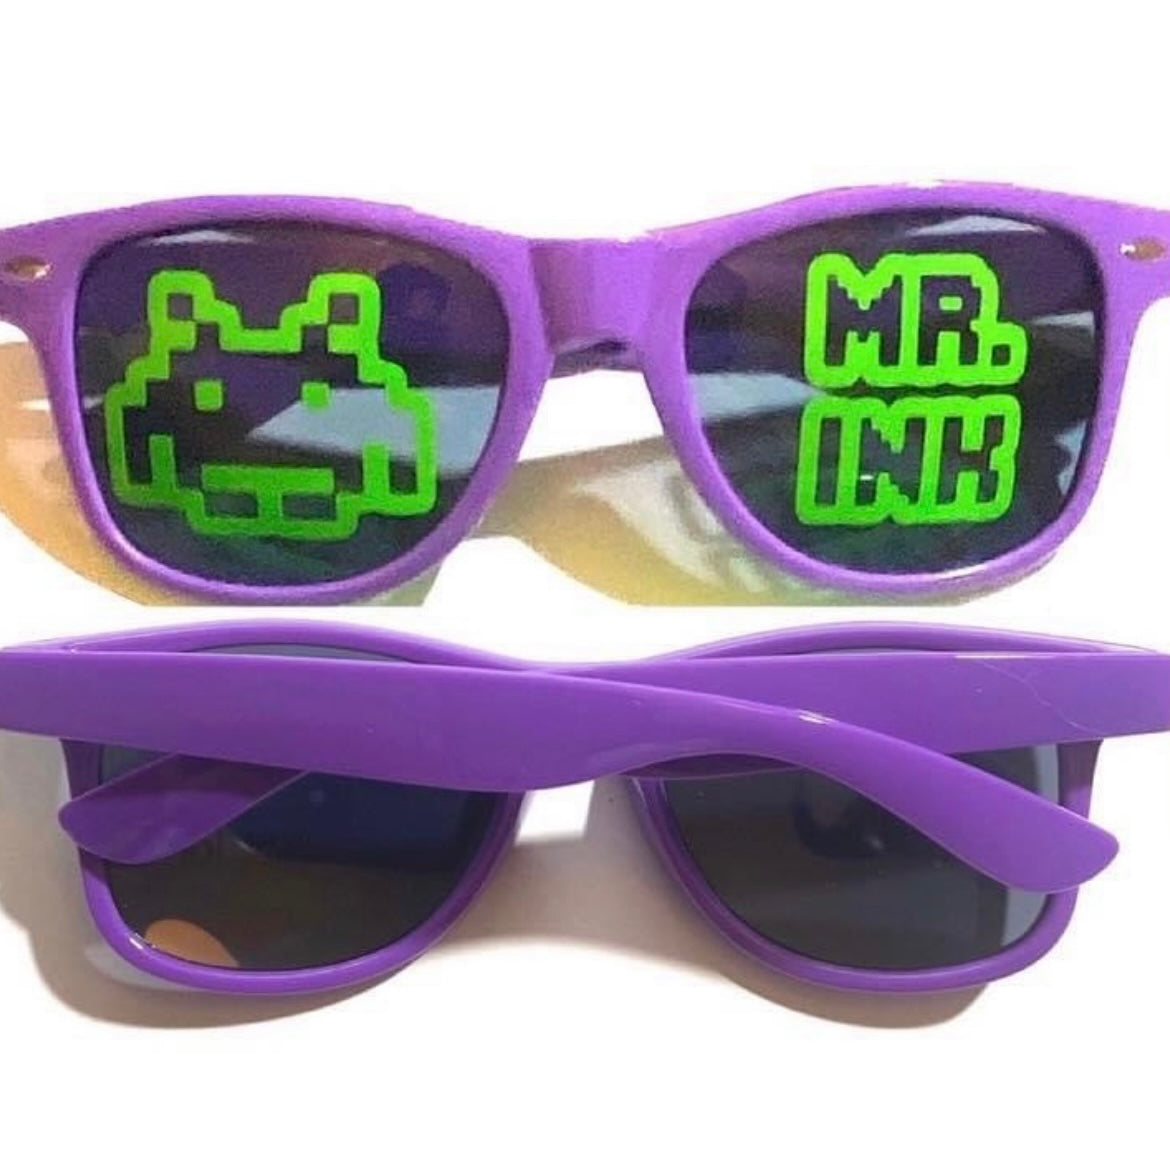 Mr Ink Sunglasses